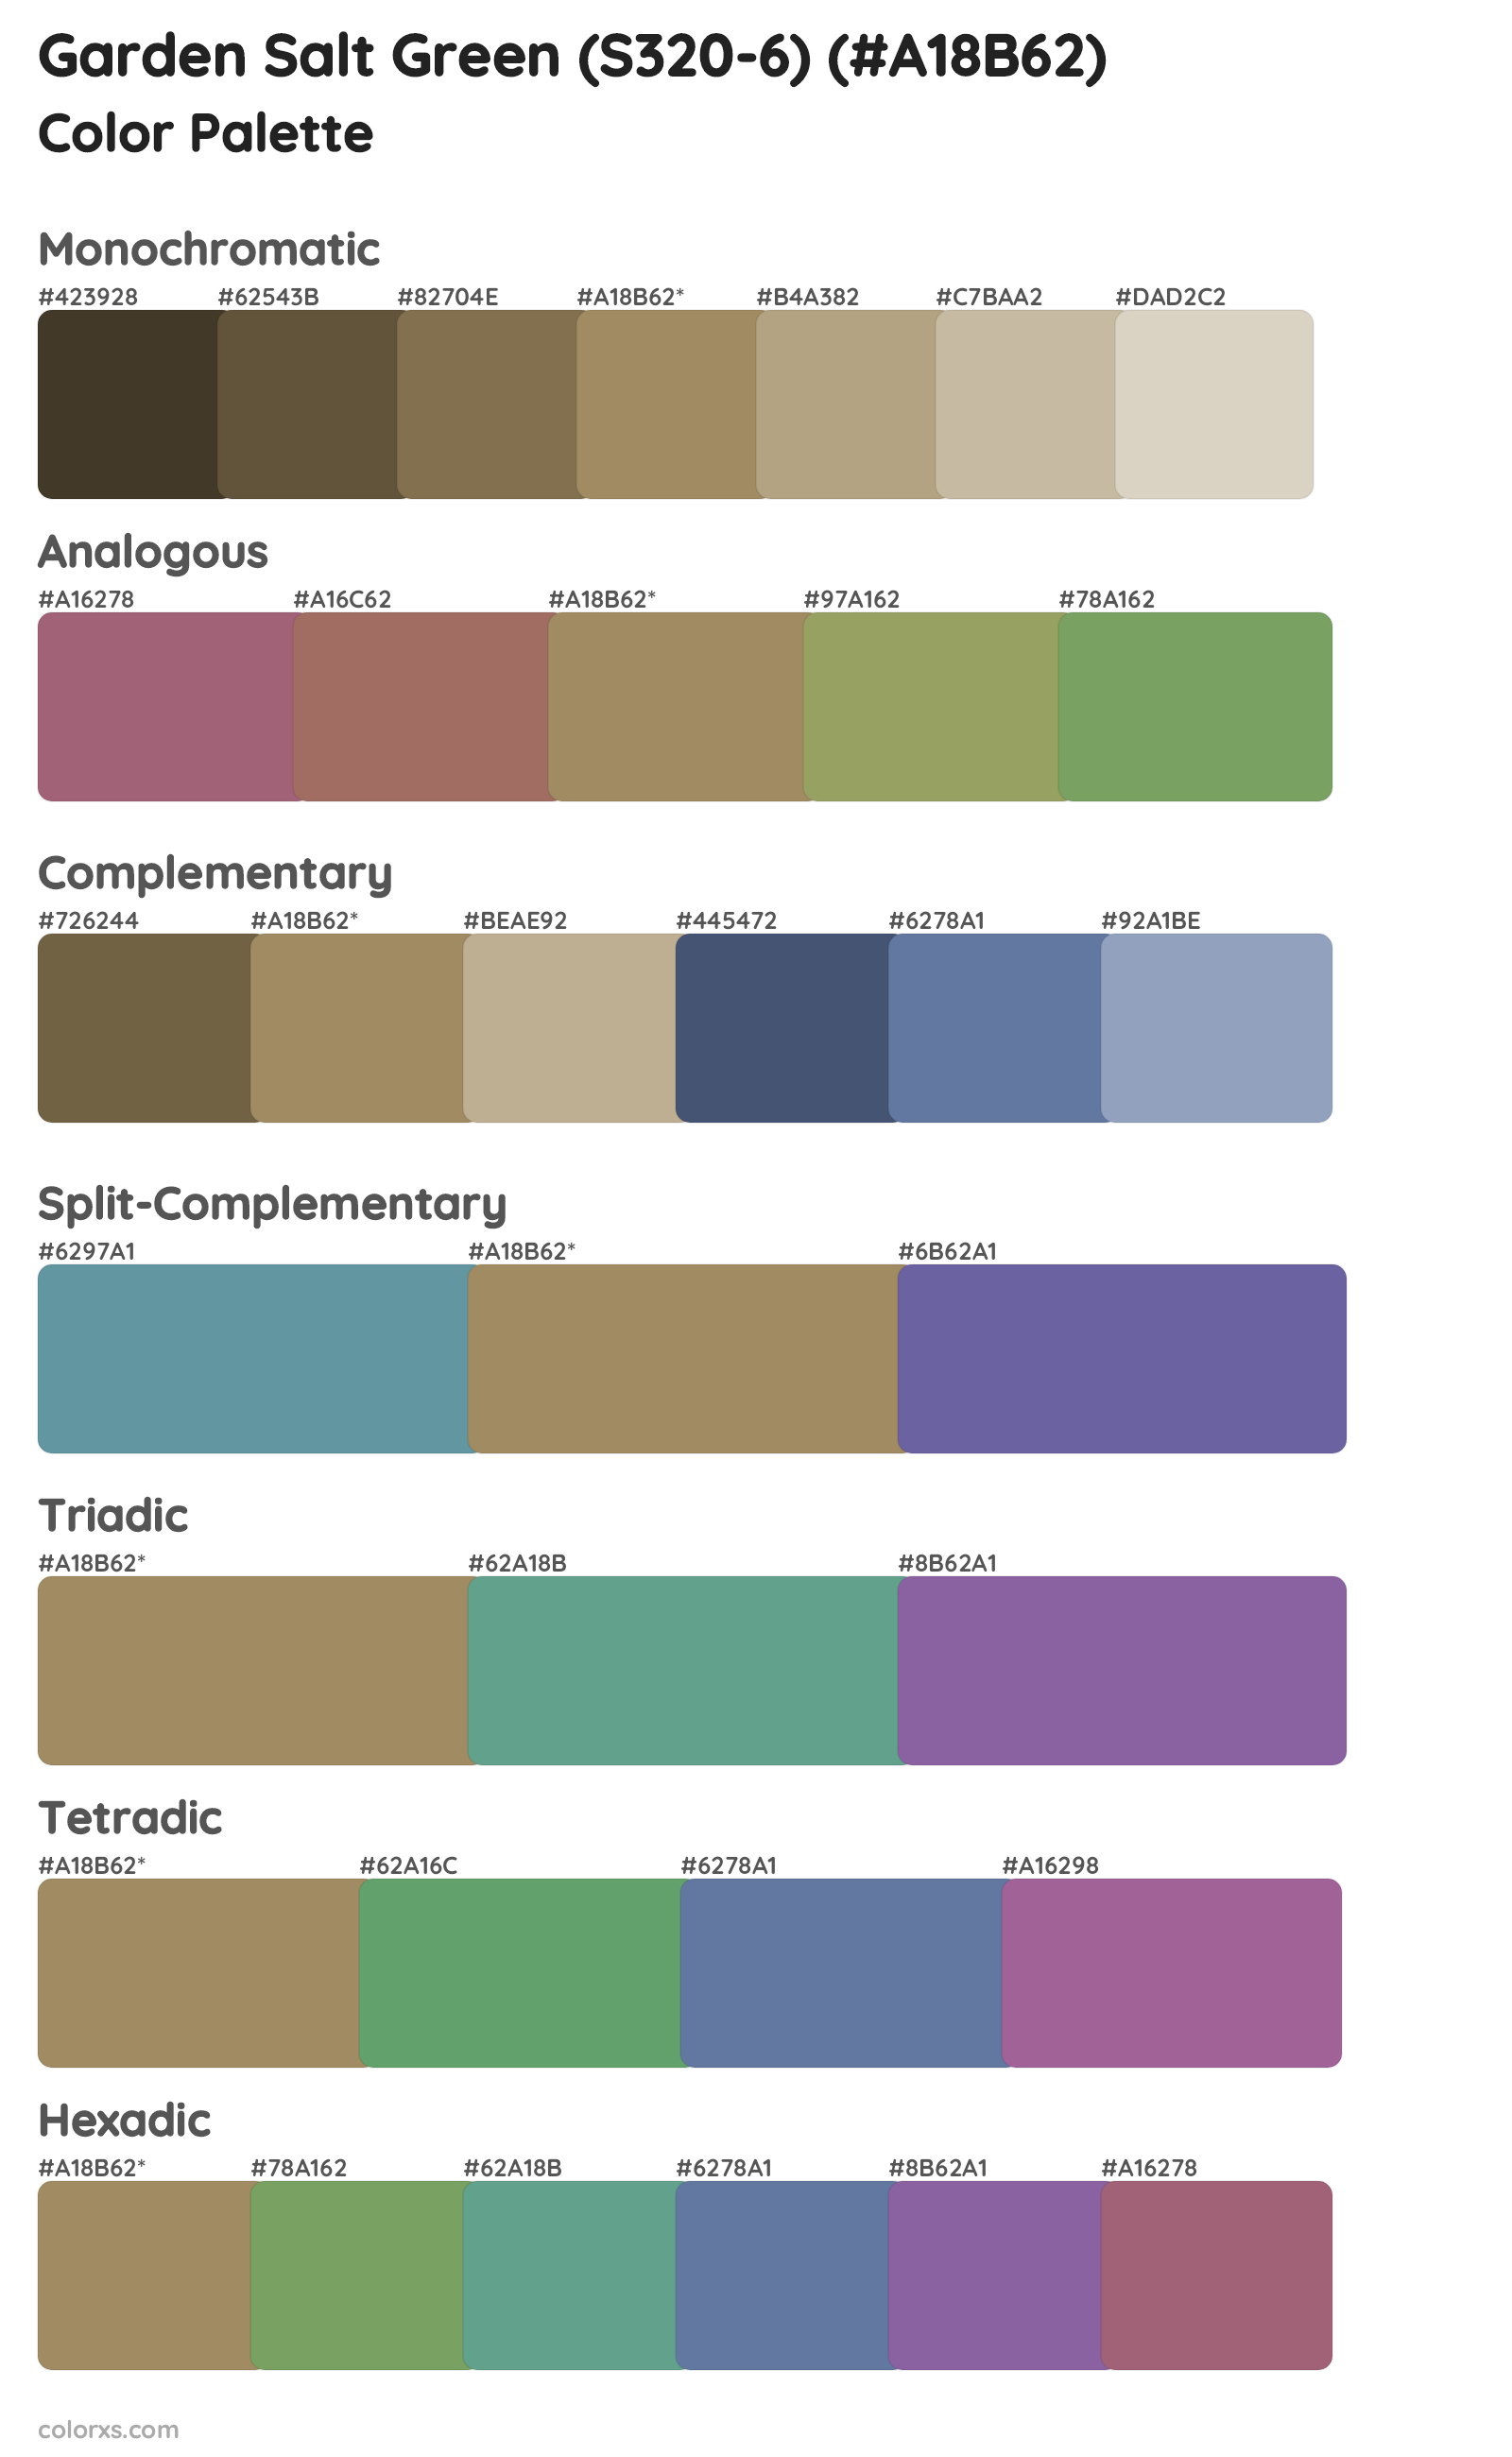 Garden Salt Green (S320-6) Color Scheme Palettes